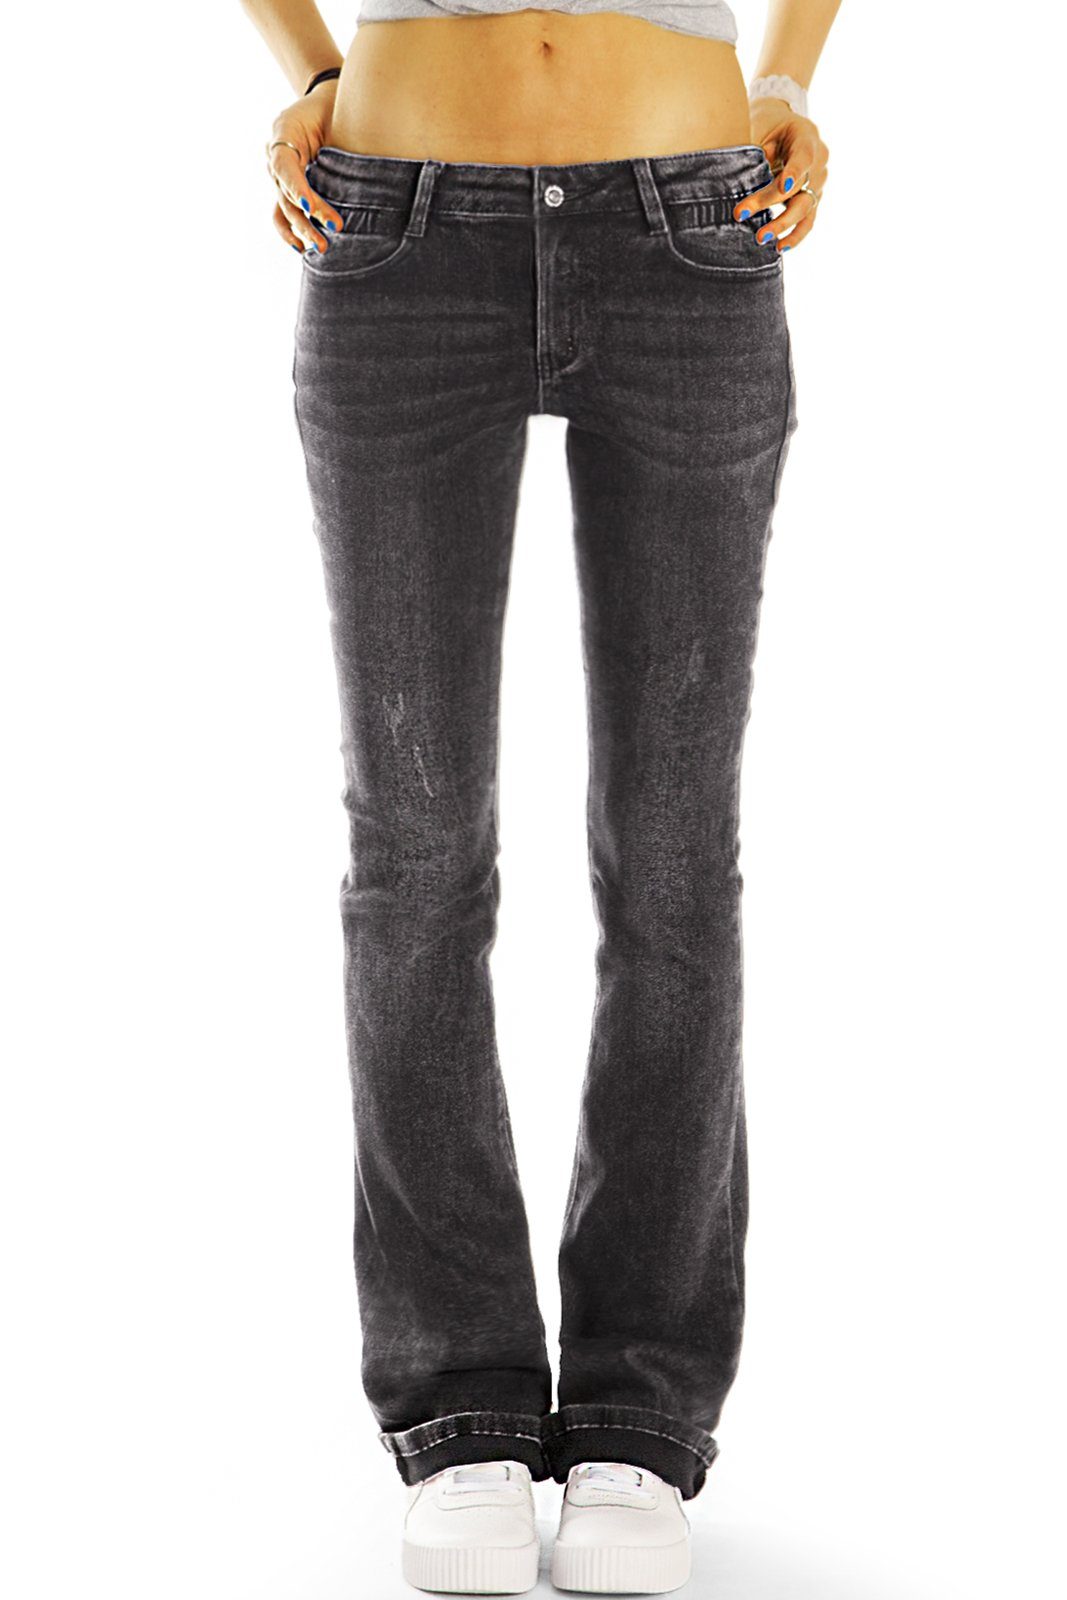 be styled Schlaghosen Damenjeans, medium Bootcut-Jeans waist j1k